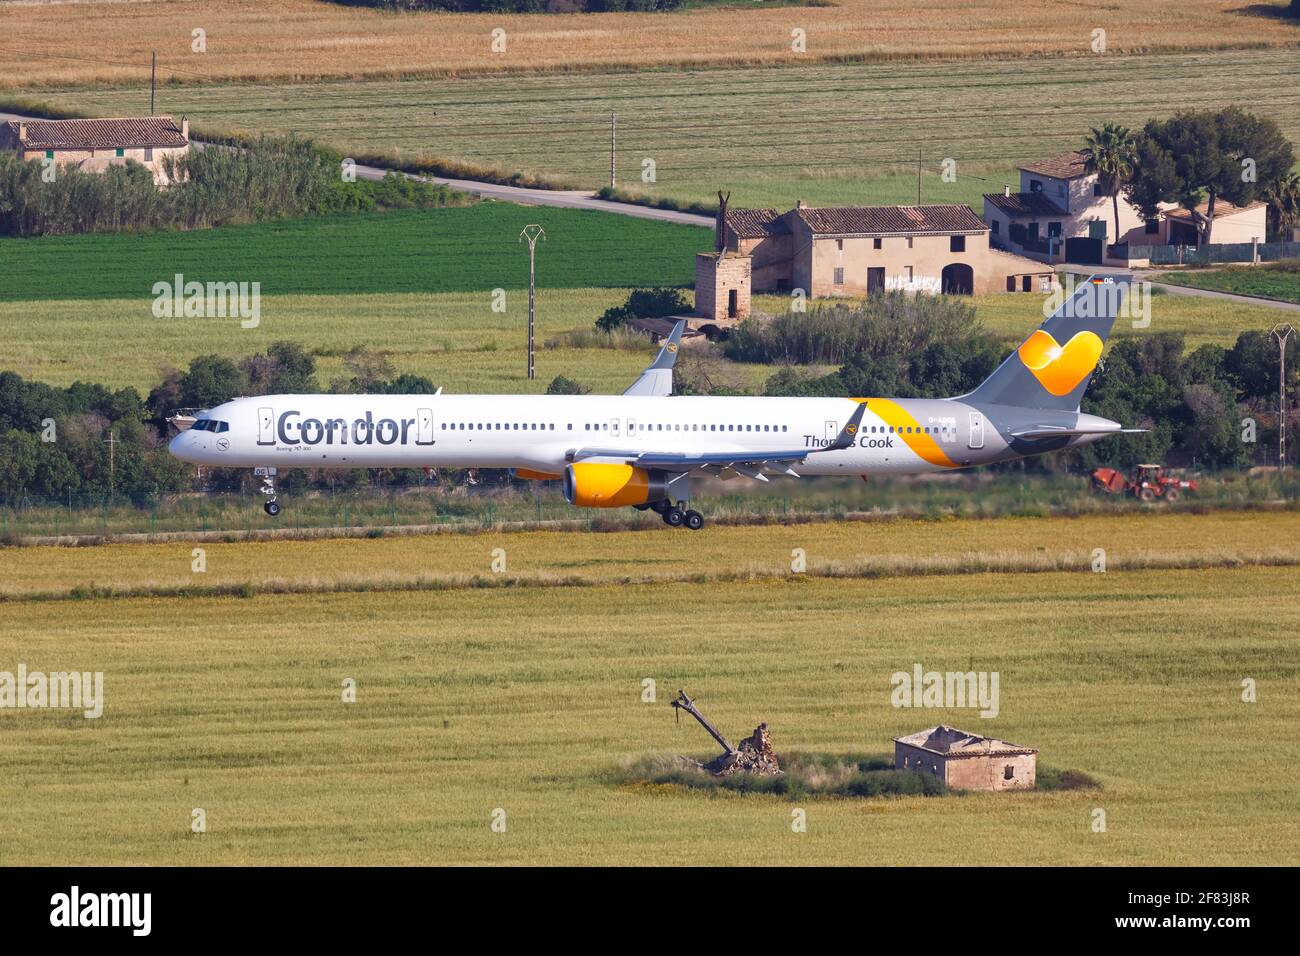 Palma de Mallorca, Spain - May 11, 2018: Condor Boeing 757 airplane at Palma de Mallorca Airport (PMI) in Spain. Boeing is an American aircraft manufa Stock Photo